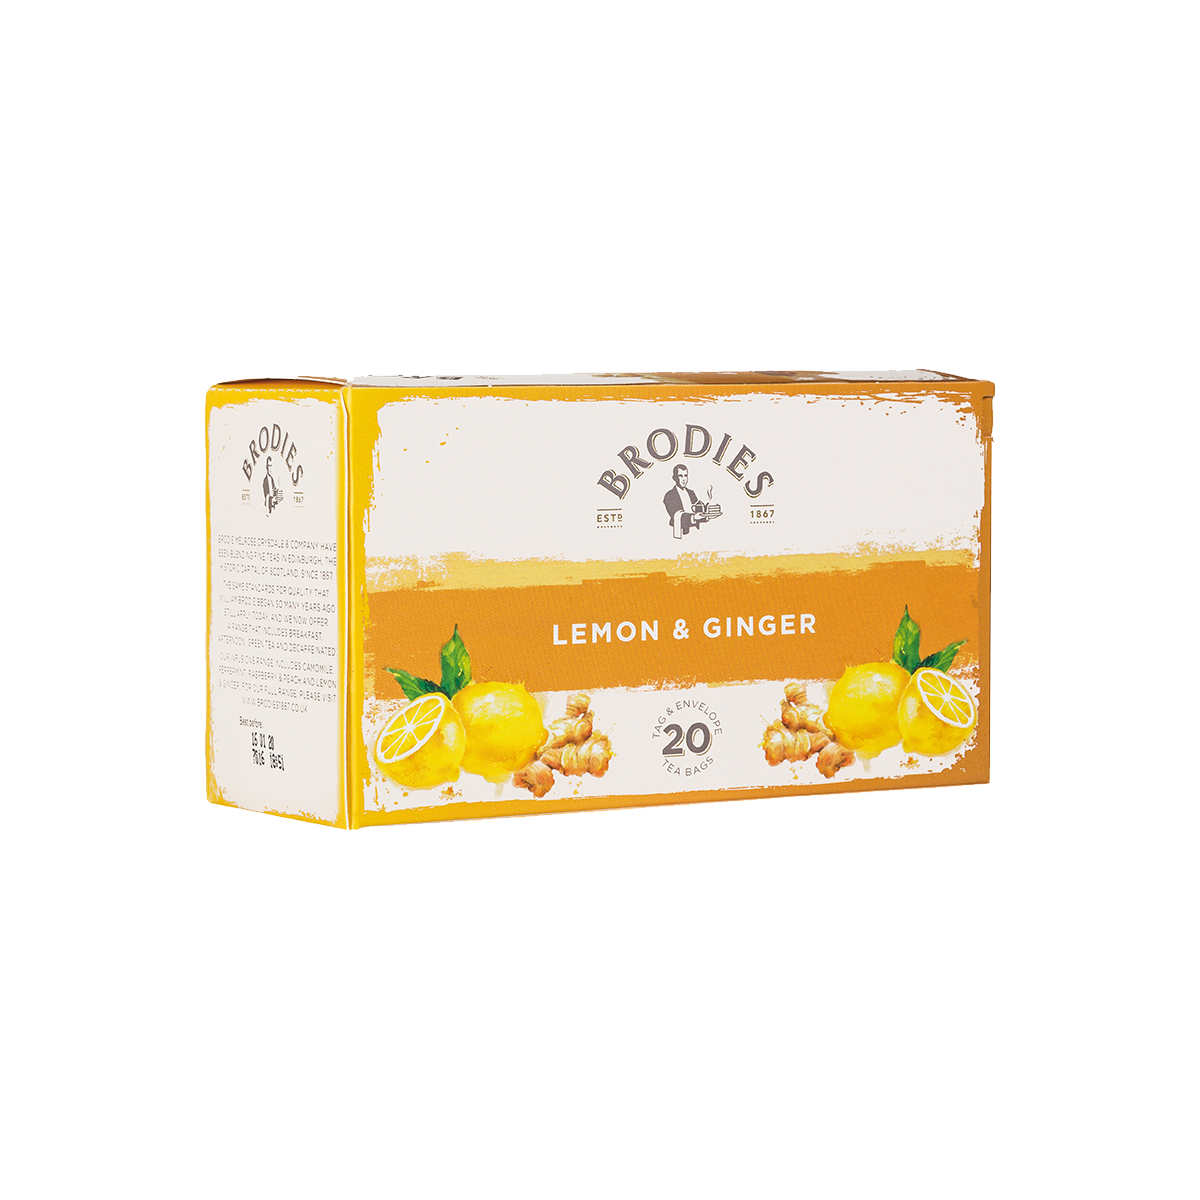 Brodies - Lemon & Ginger Tea